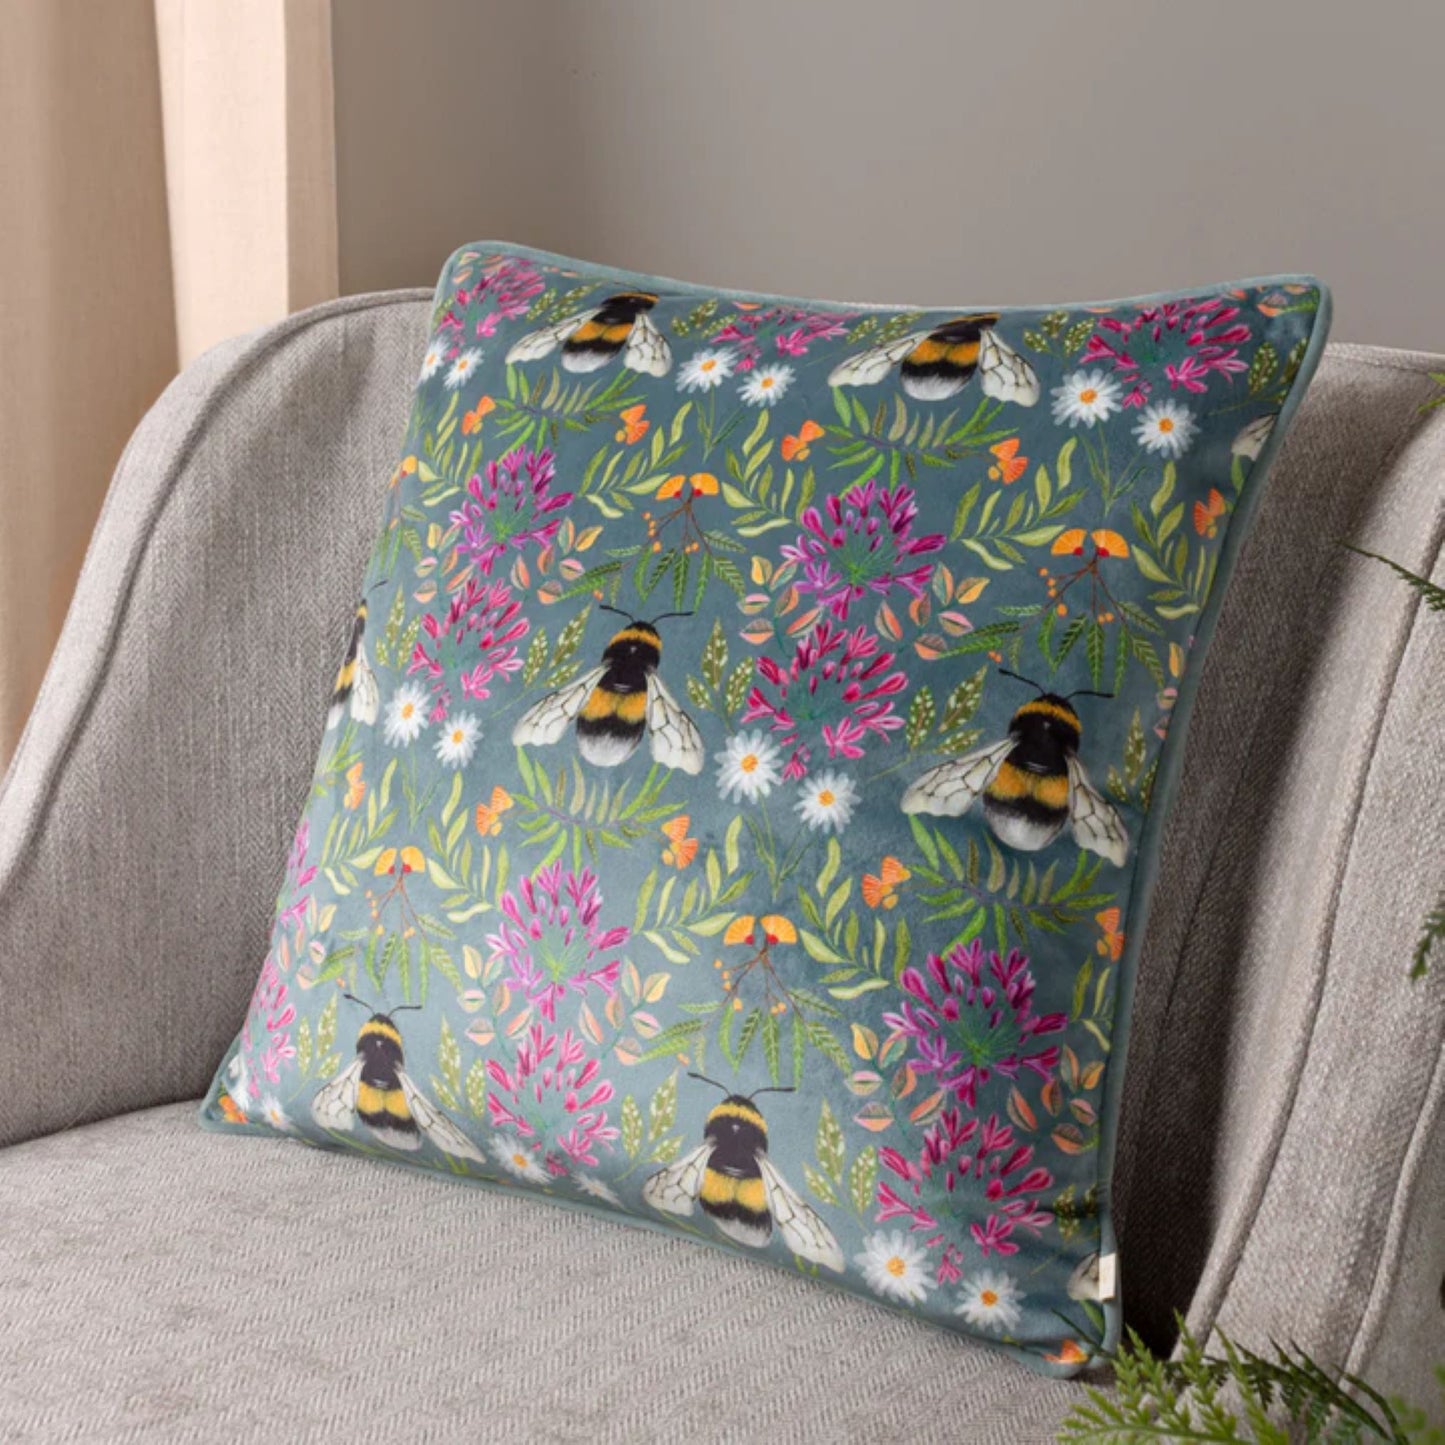 Bumble Bee Cushions